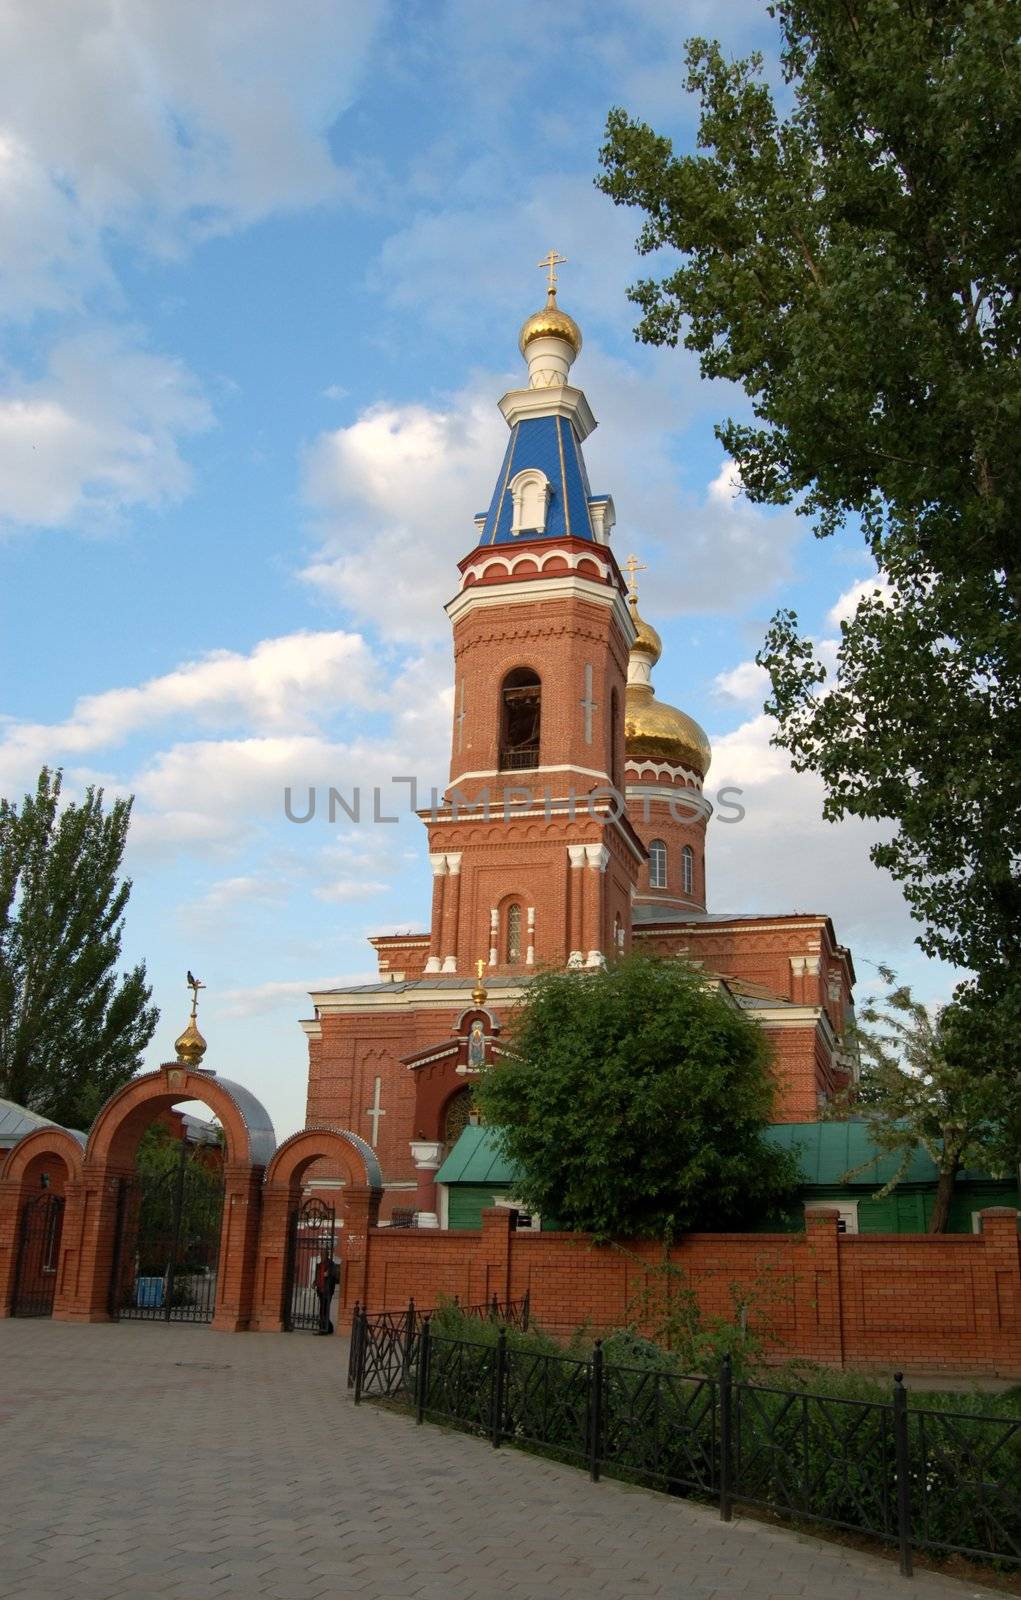 St.Trinity Russian Orthodox Church in Astrakhan, Russia